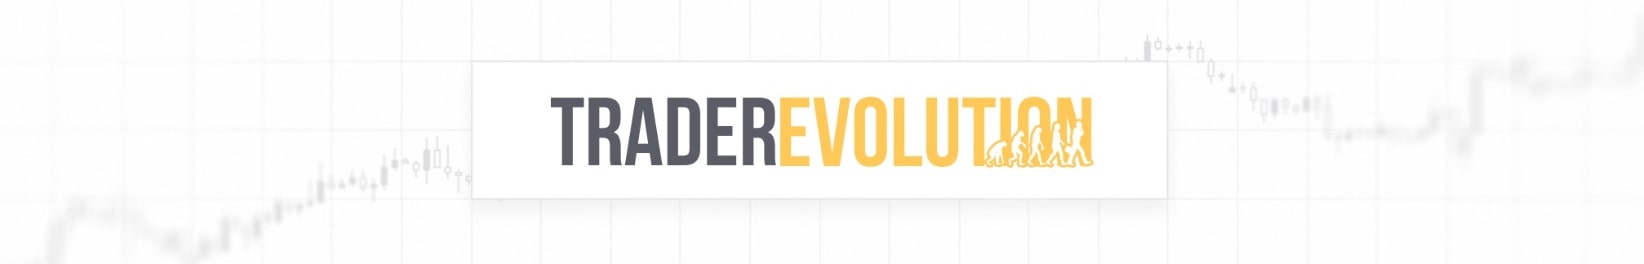 Trader Evolution баннер